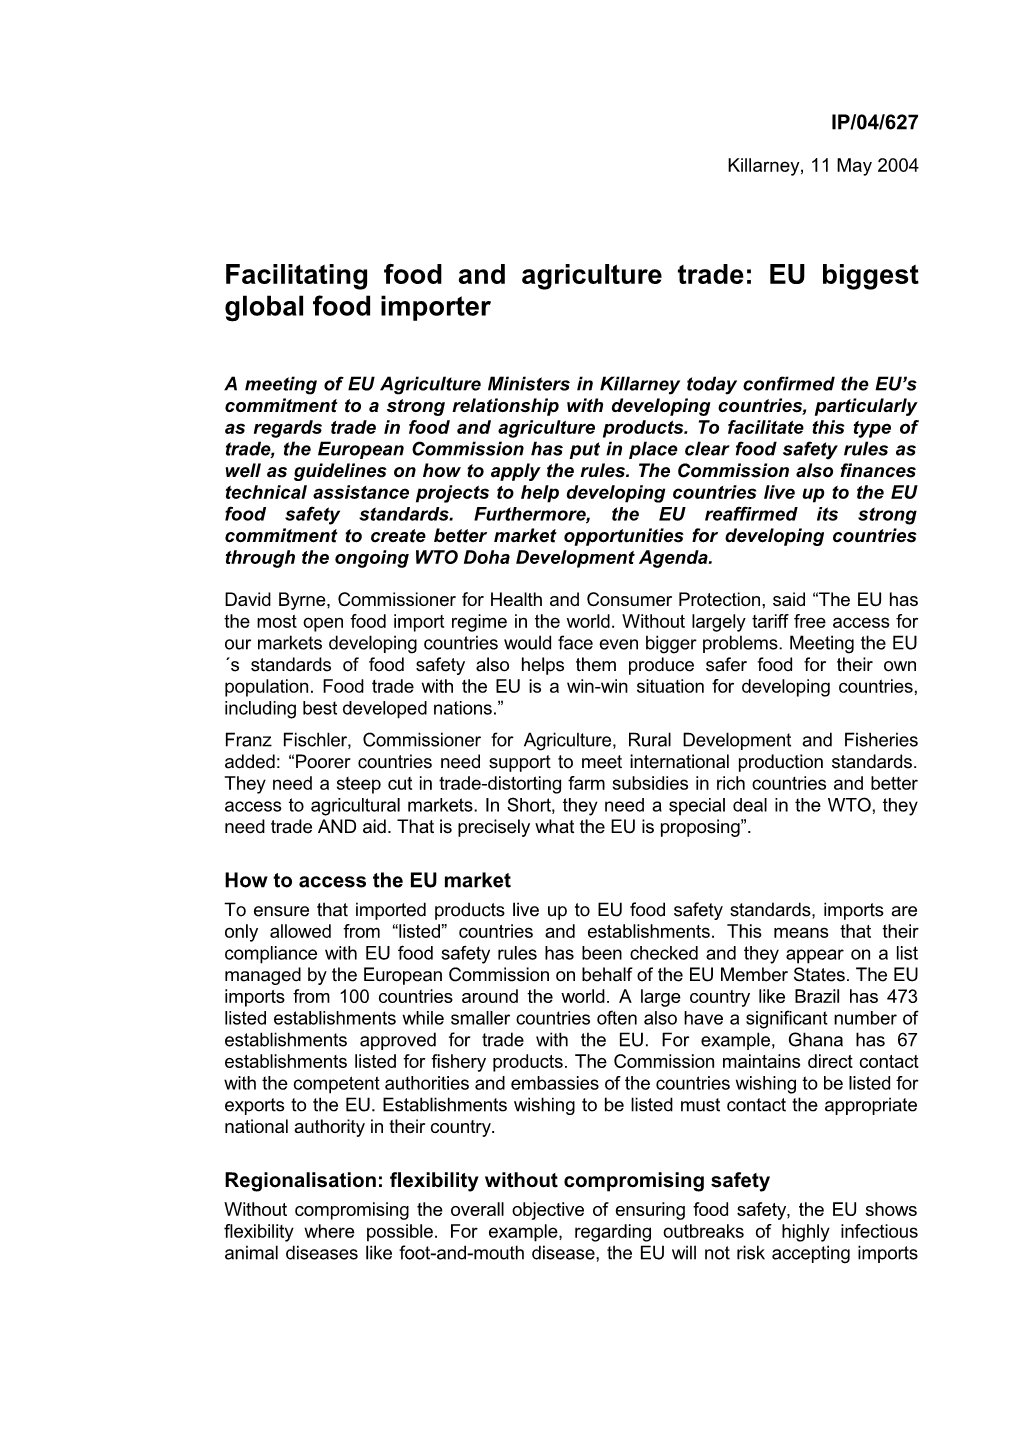 Facilitating Food and Agriculturetrade: EU Biggest Global Food Importer